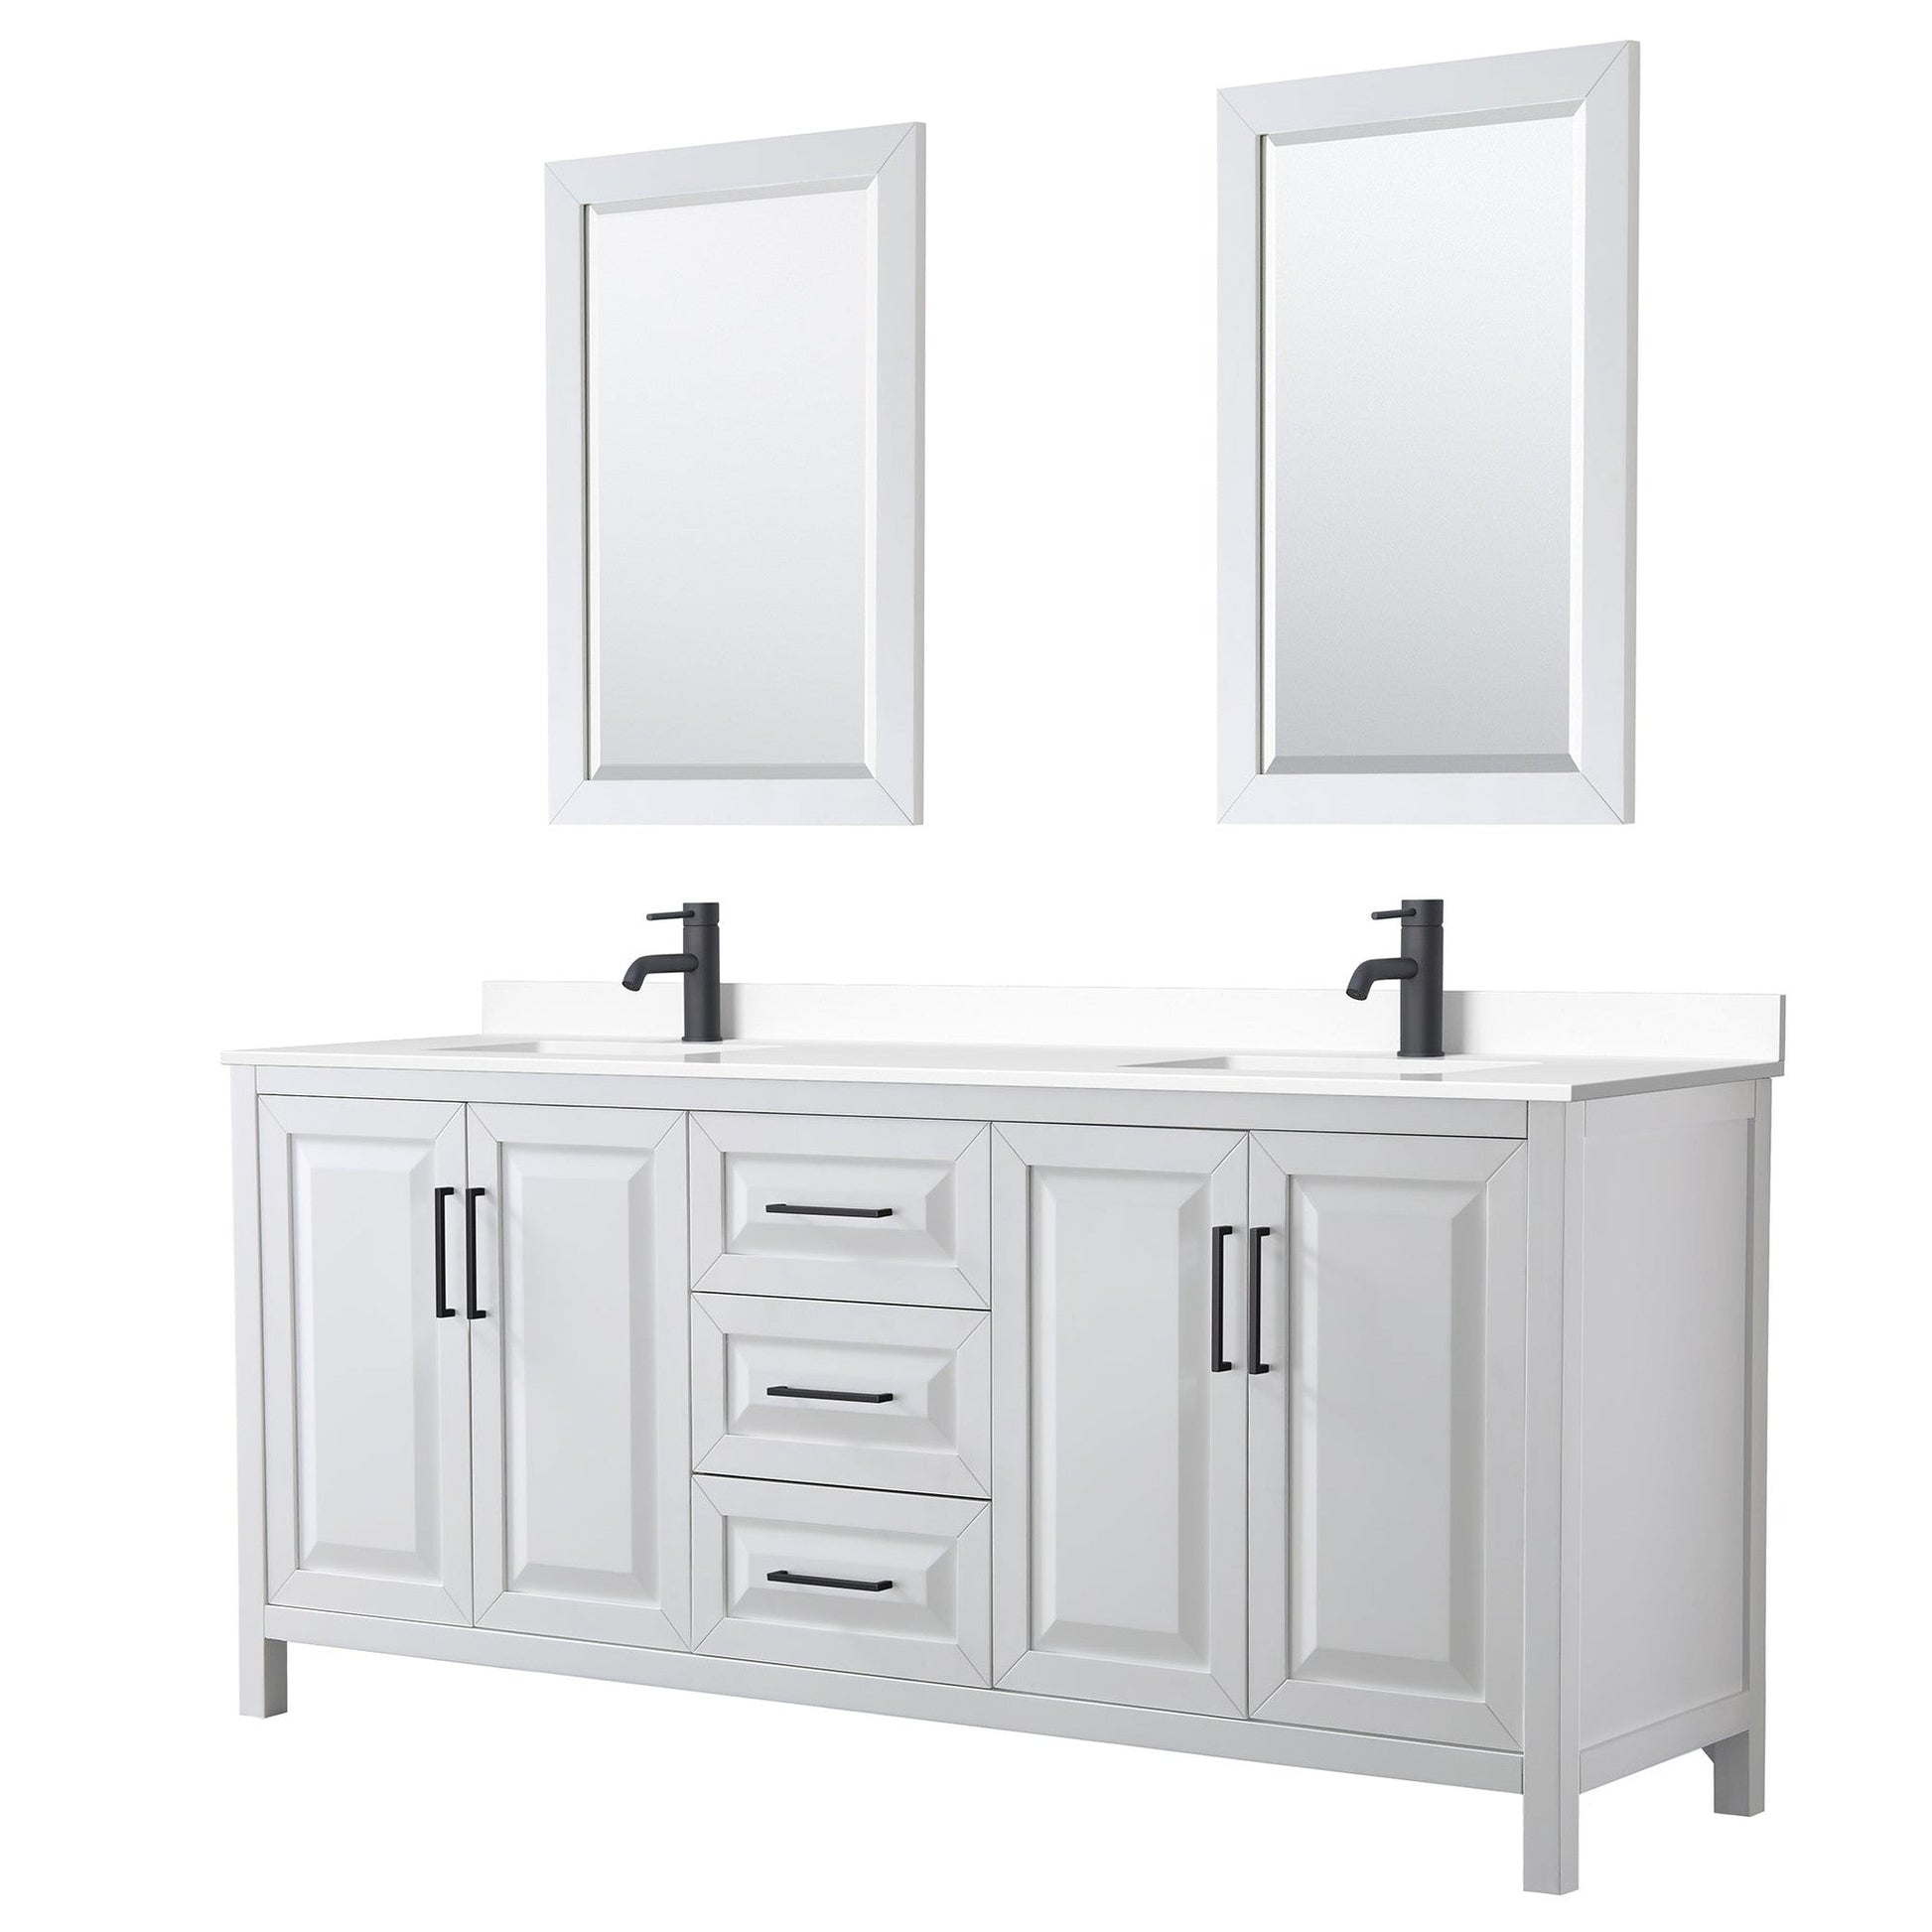 Daria 80" Double Bathroom Vanity in White, White Cultured Marble Countertop, Undermount Square Sinks, Matte Black Trim, 24" Mirrors